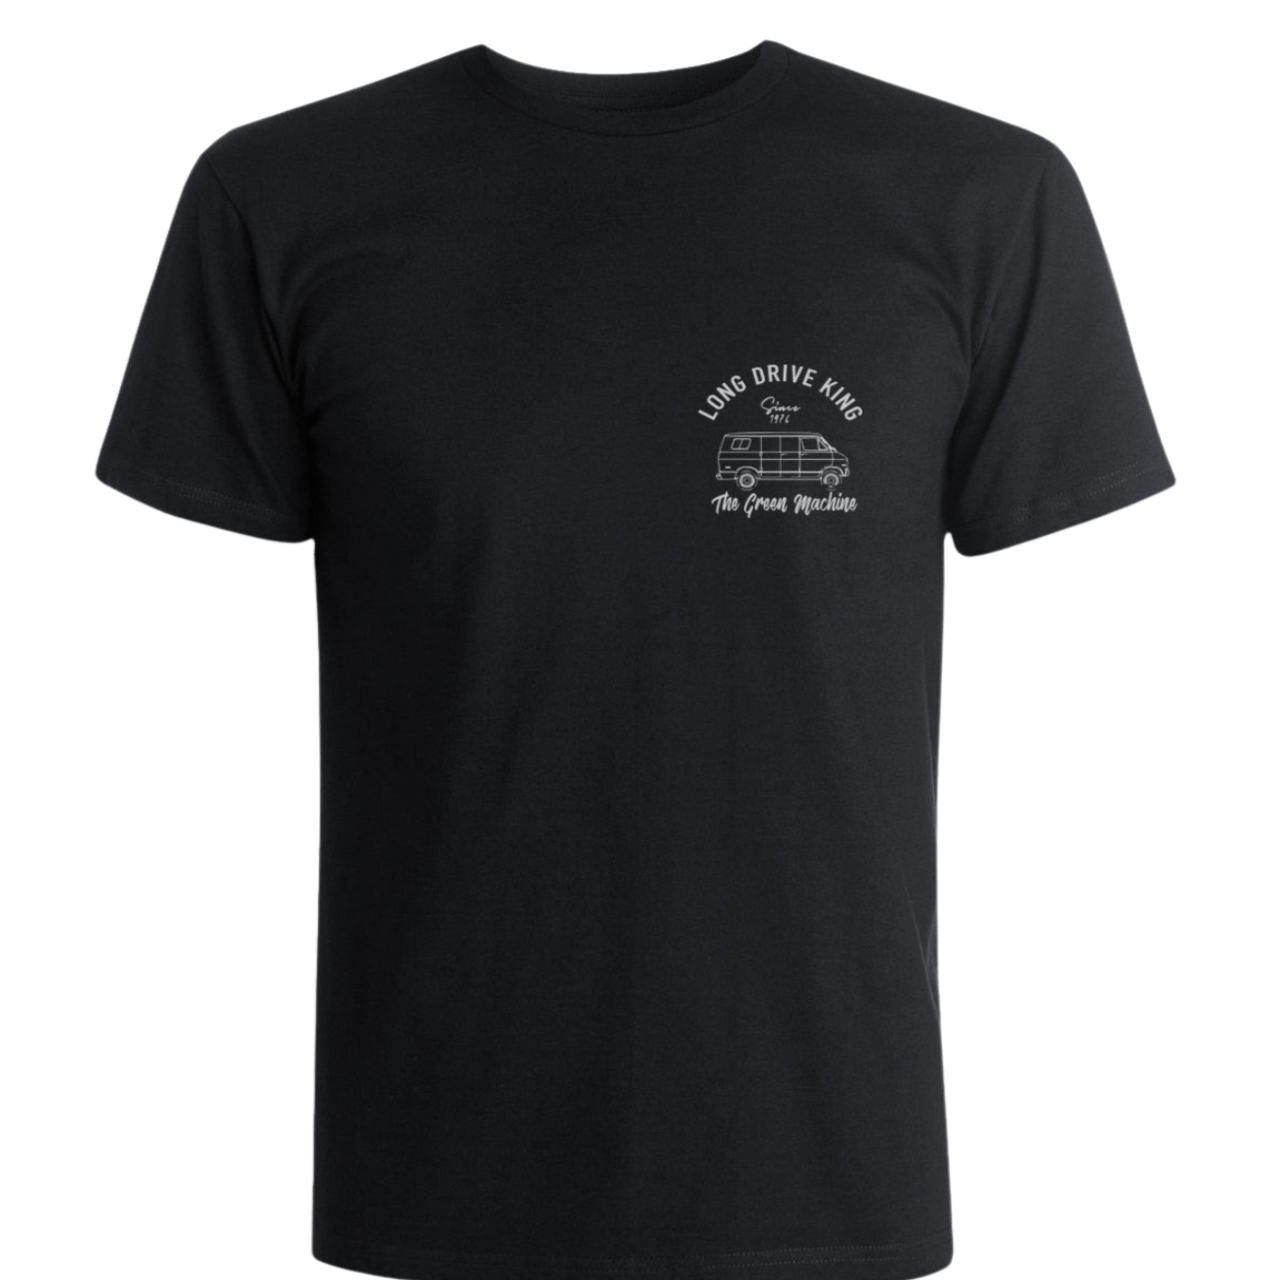 Haus of  Grey Long Drive King Men's Graphic Tee Shirt